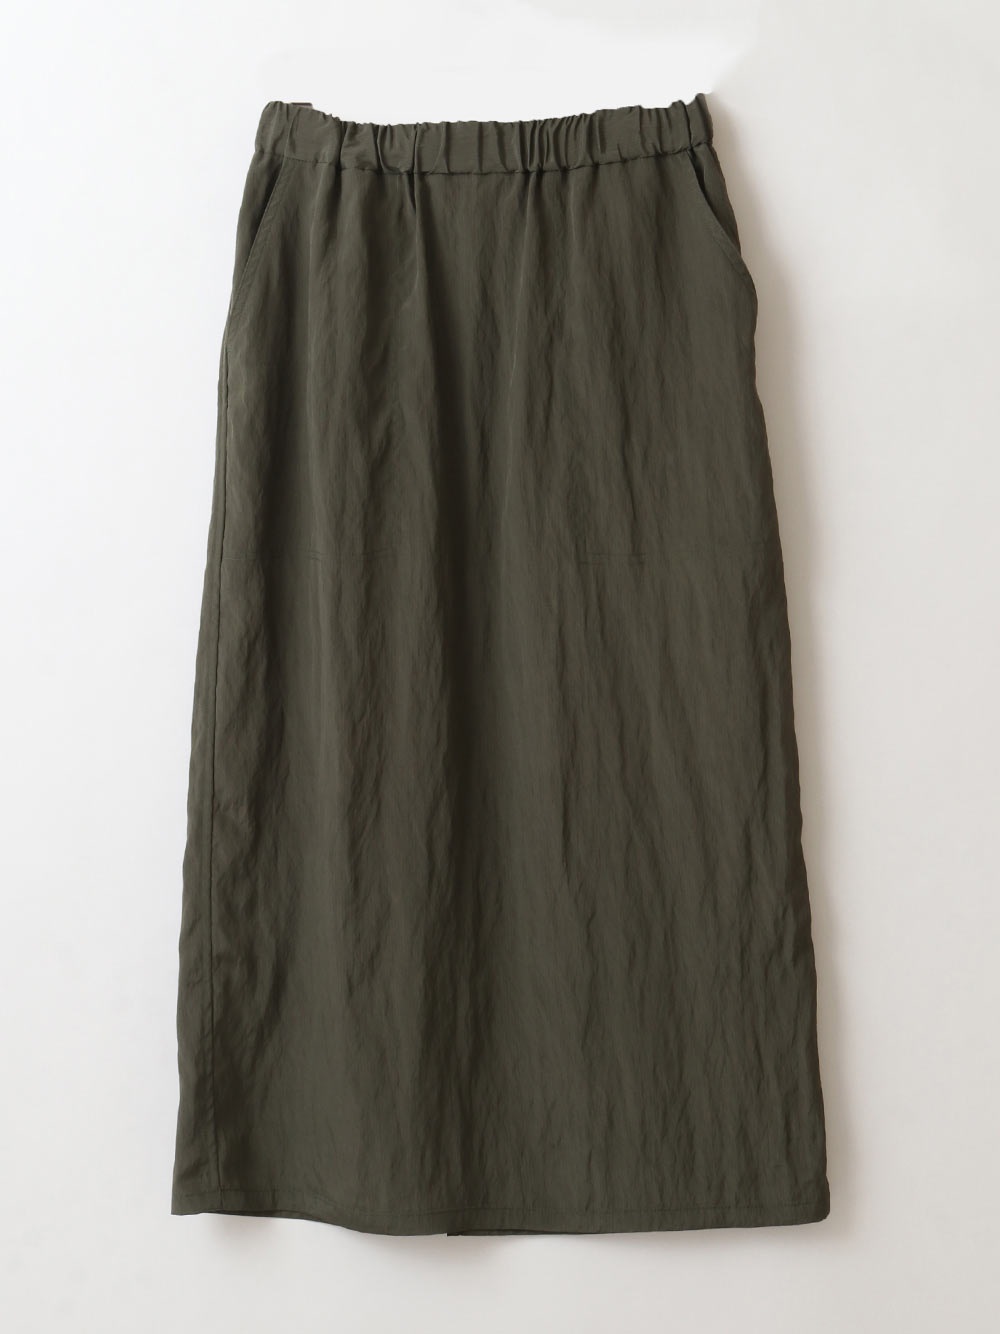 Washer Skirt(63カーキ-フリー)